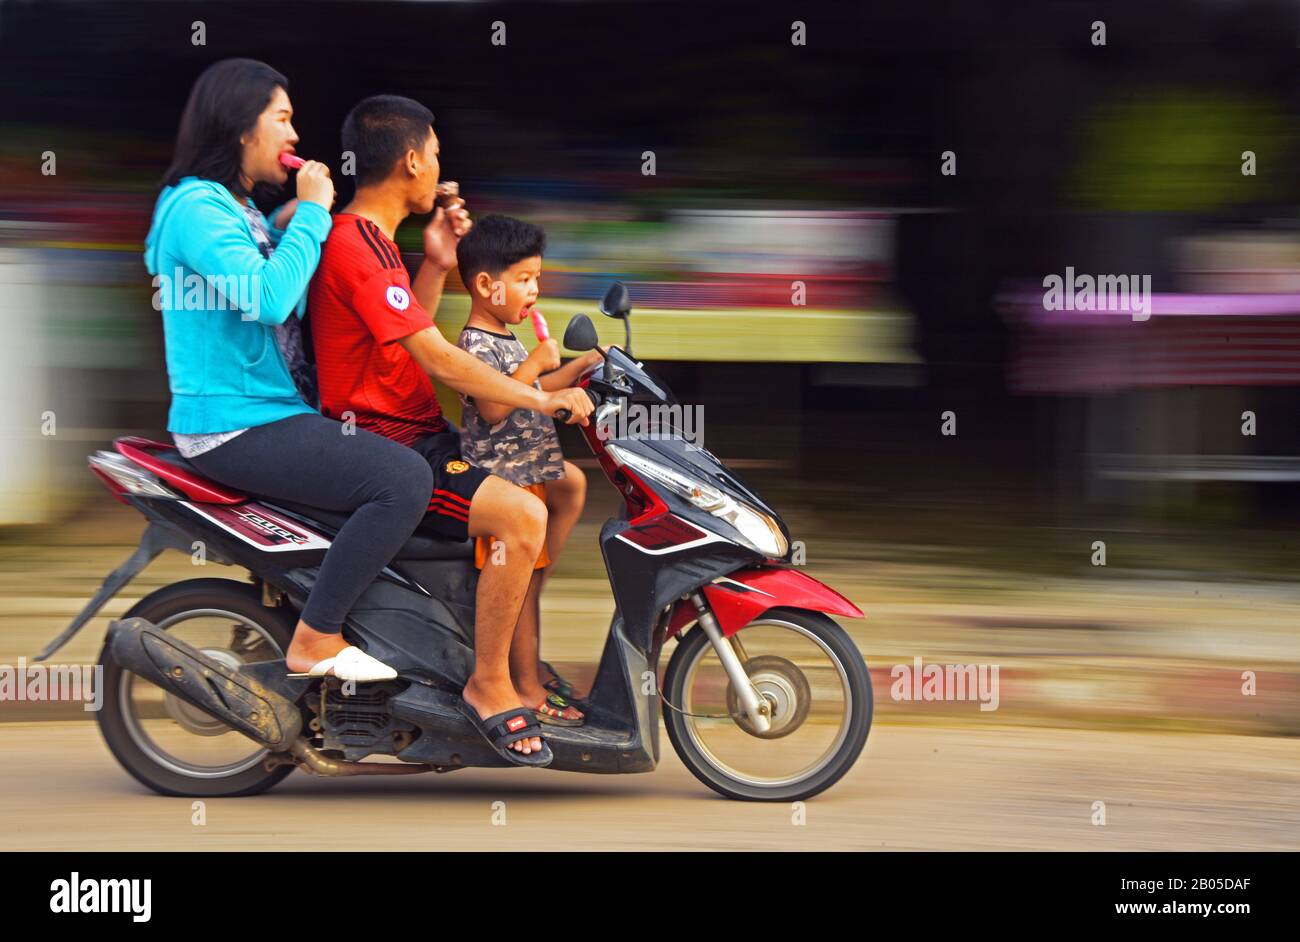 three people on the same motor bike sucking ice cream, Thailand, Phuket Stock Photo